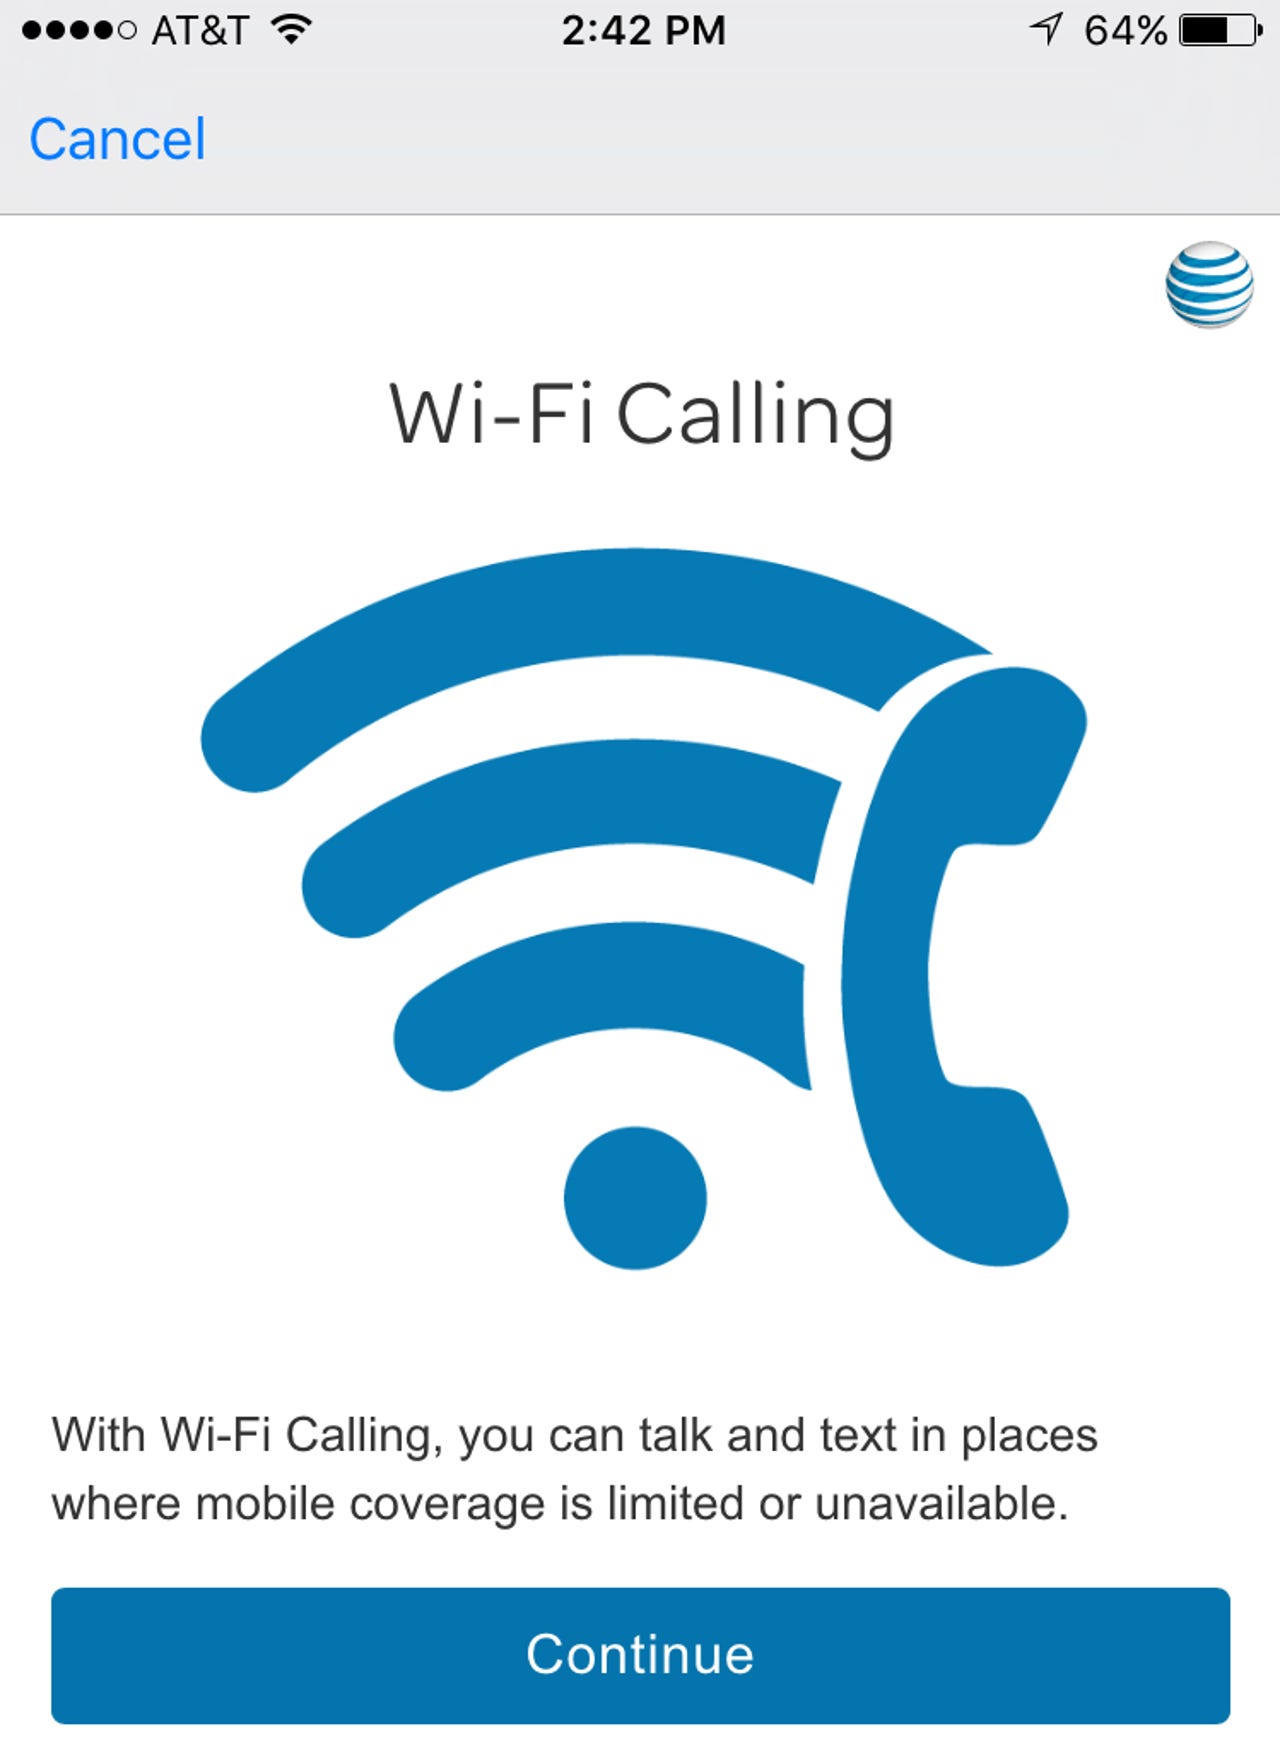 att-wifi-iphone-calling.png